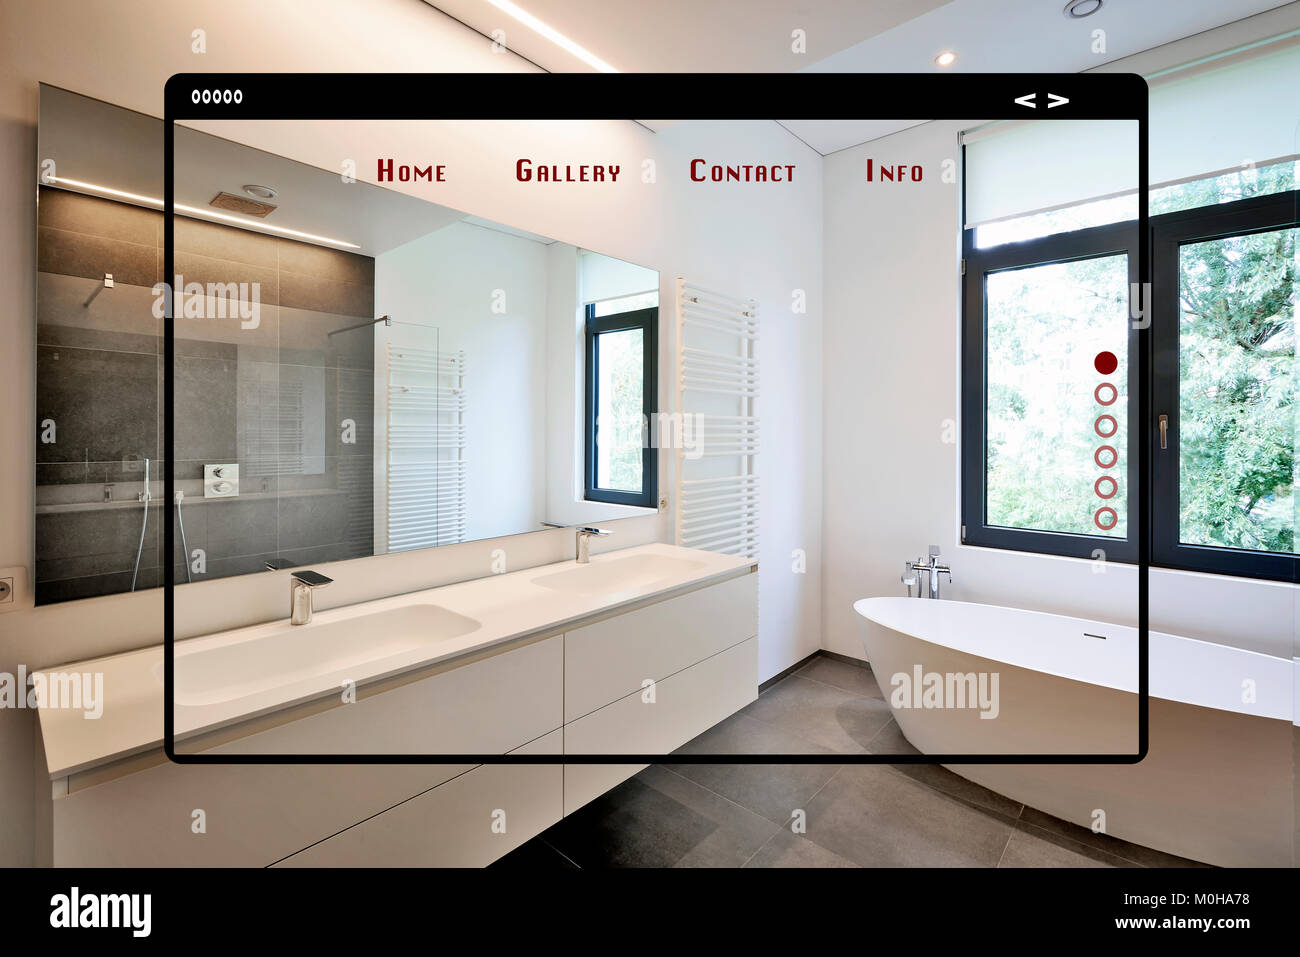 Modern site web interface for gallery. Tiled bathroom with windows towards garden Stock Photo